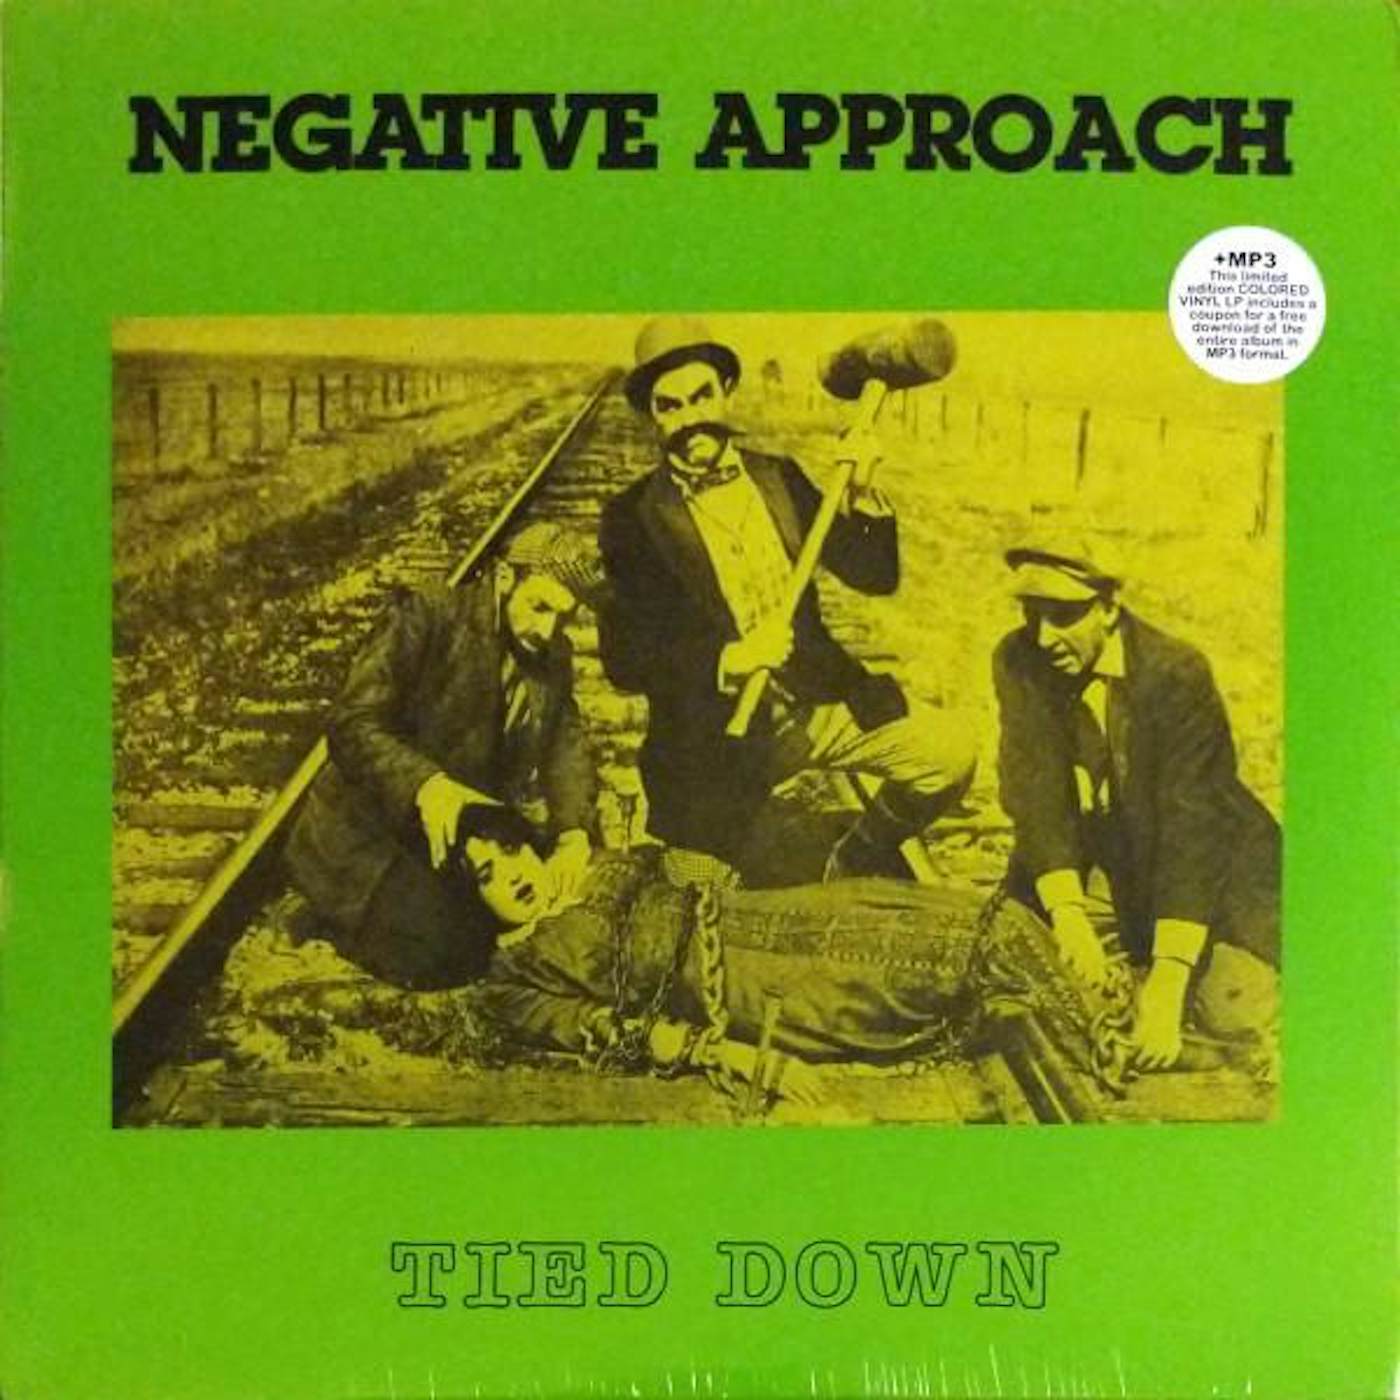 Negative Approach TIED DOWN (COLOR VINYL) Vinyl Record